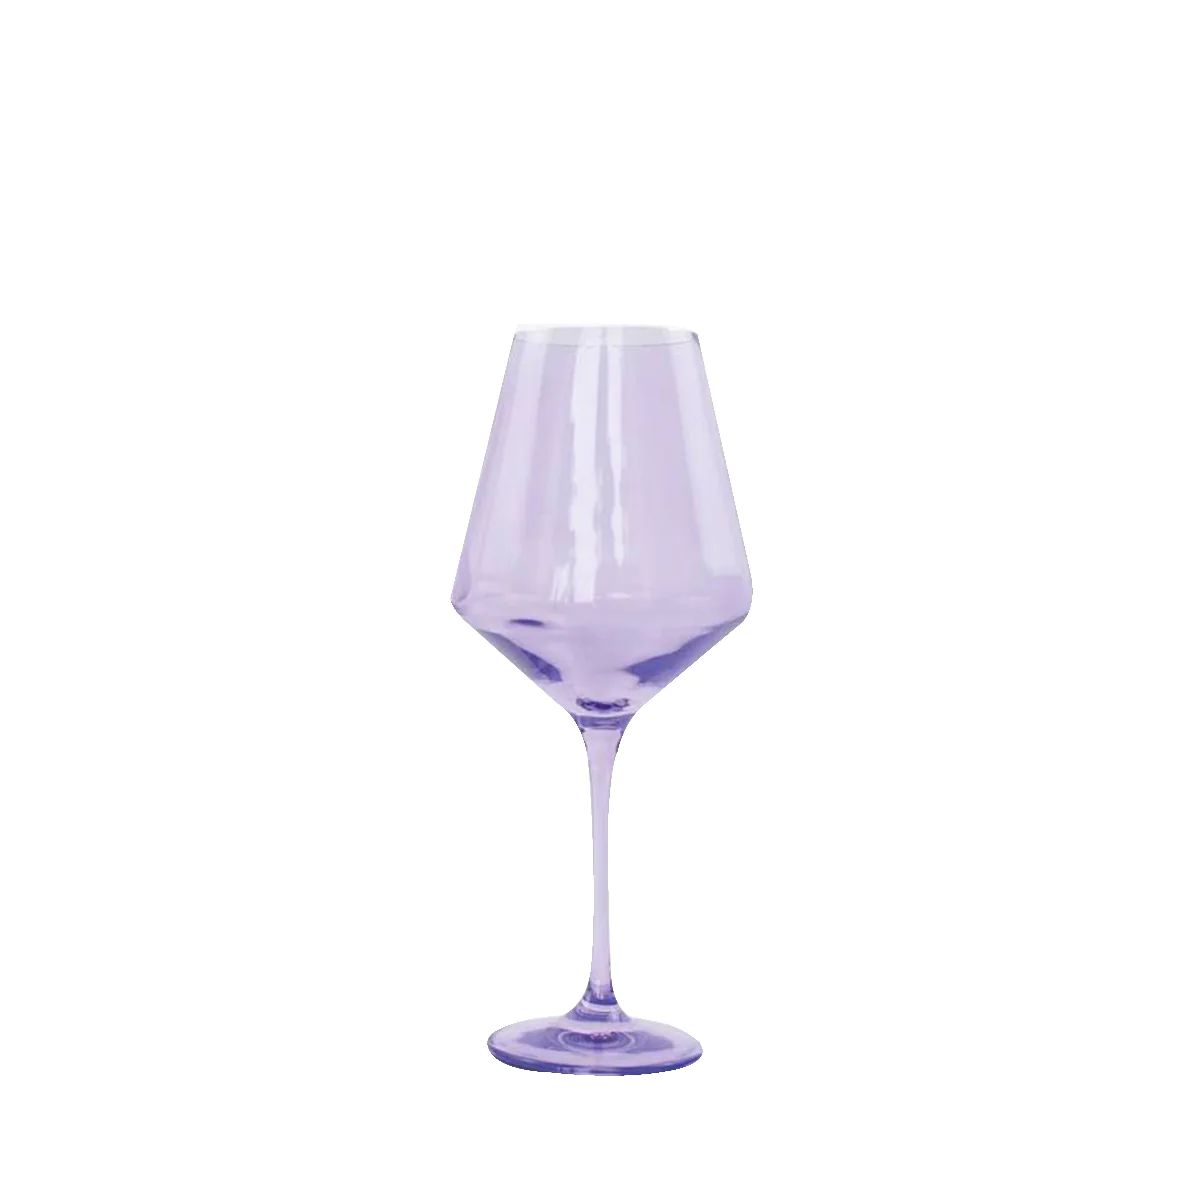 Estelle Colored Wine Glasses - Set of 6, Lavender | Blue Print